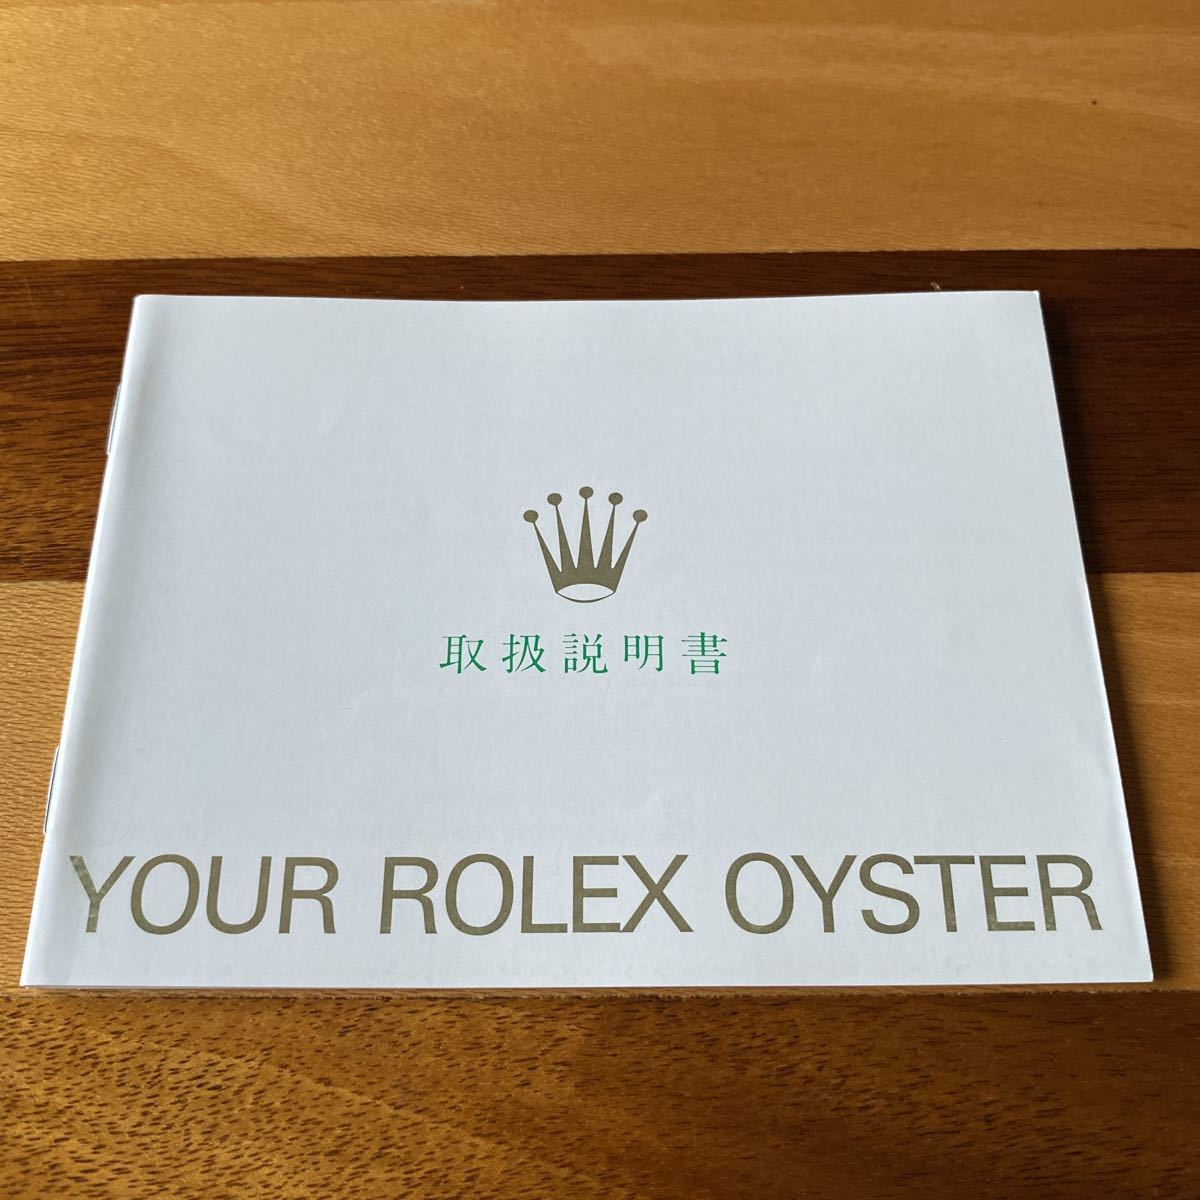 2340【希少必見】ロレックス 取扱説明書 付属品 冊子 Rolex oyster 定形郵便94円可能_画像1